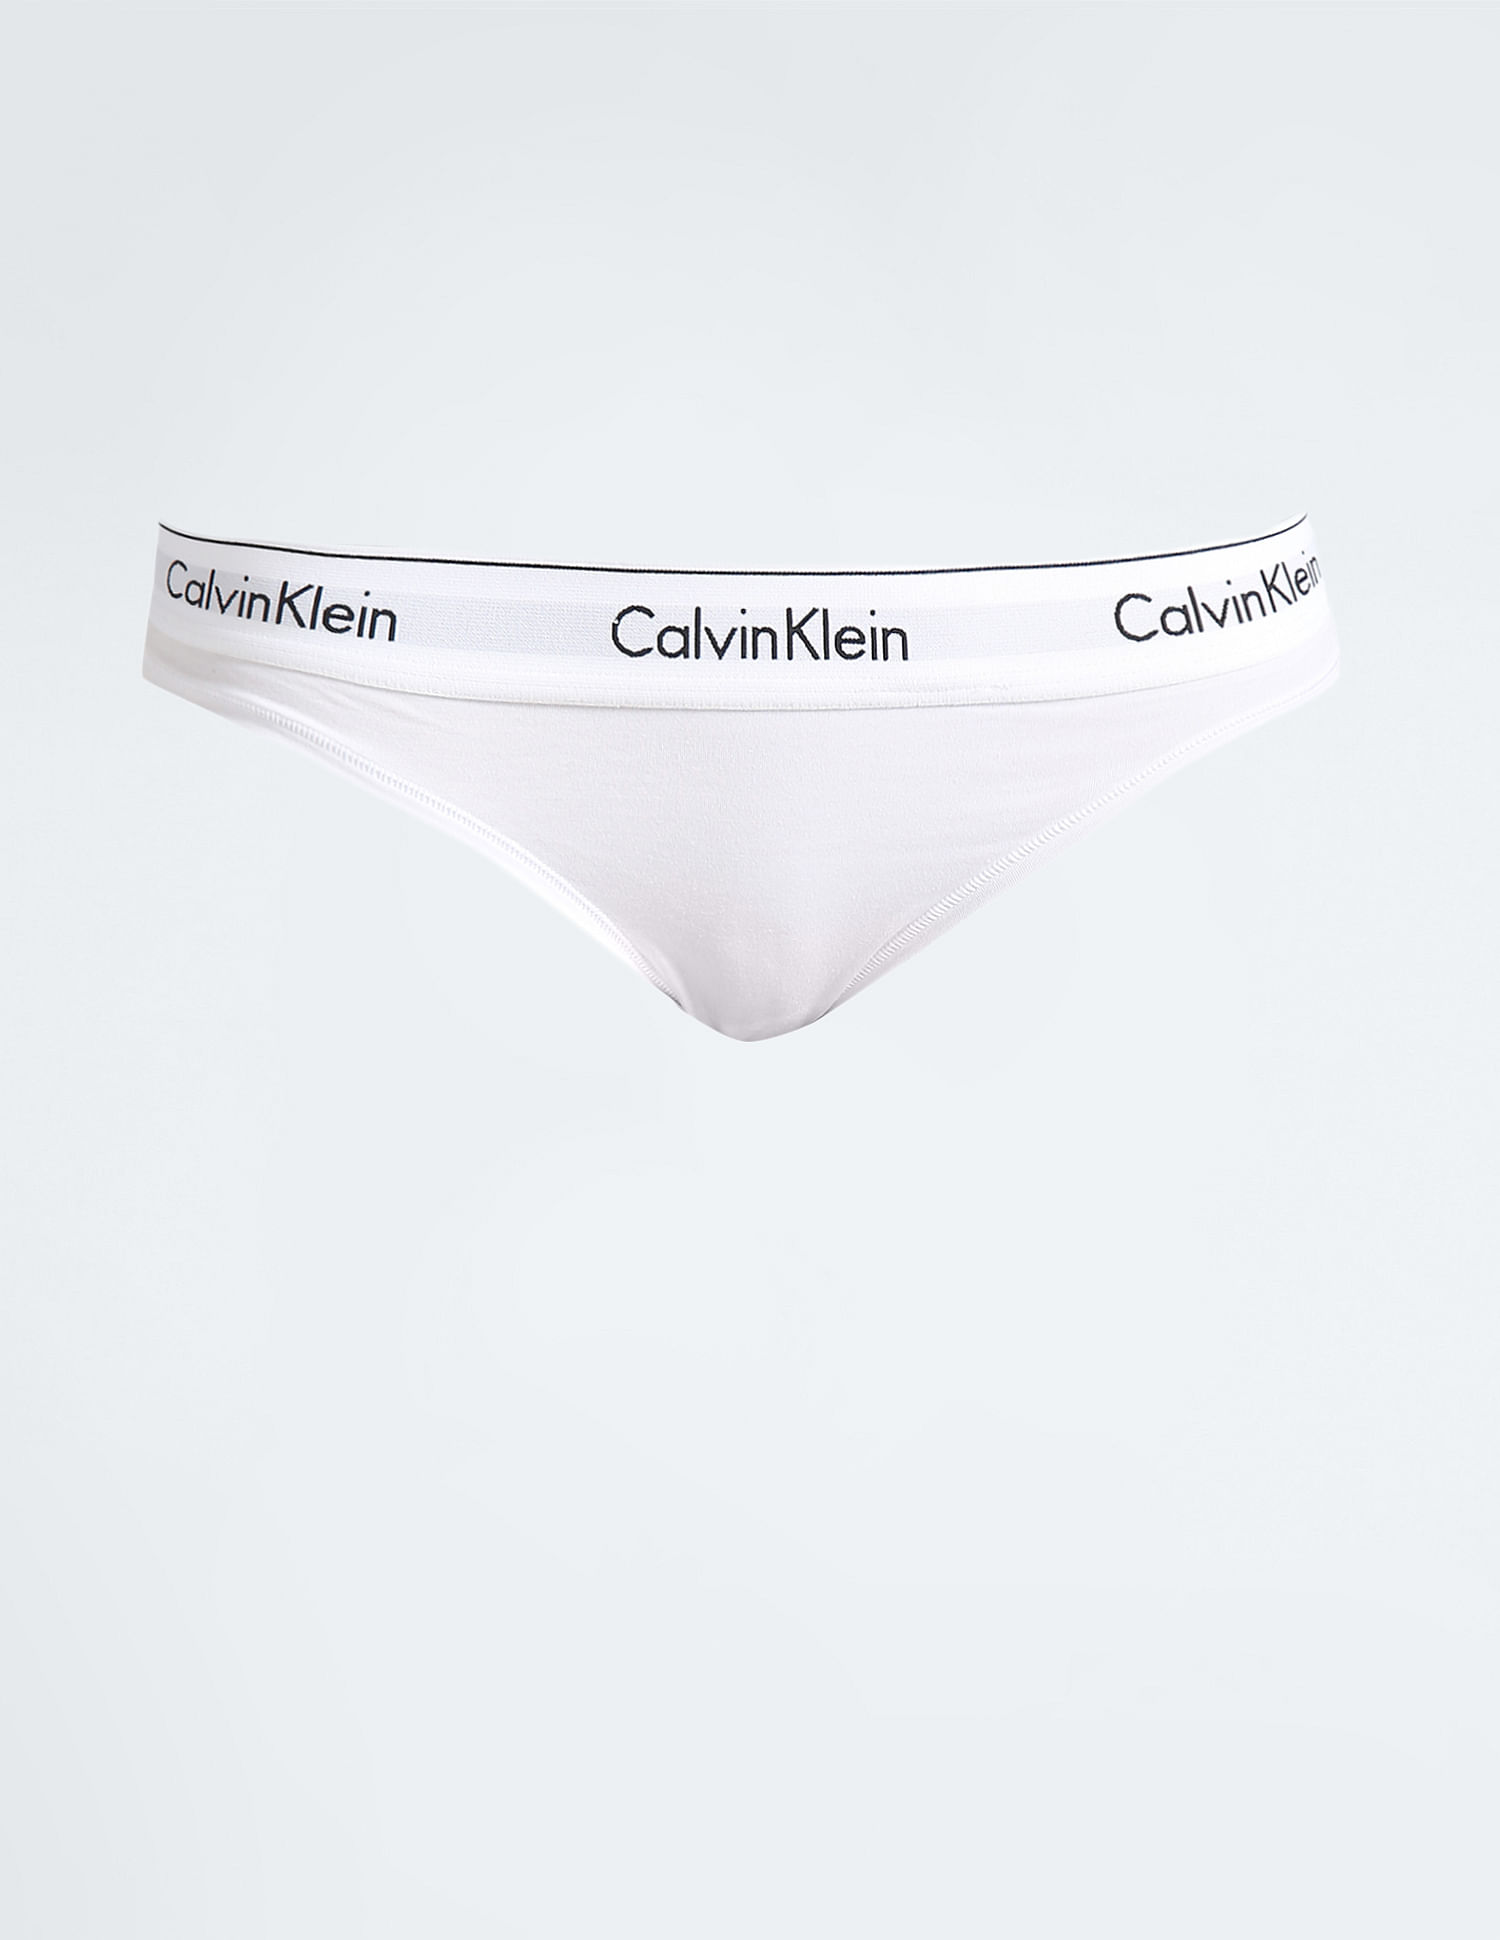 Buy Calvin Klein Thong online